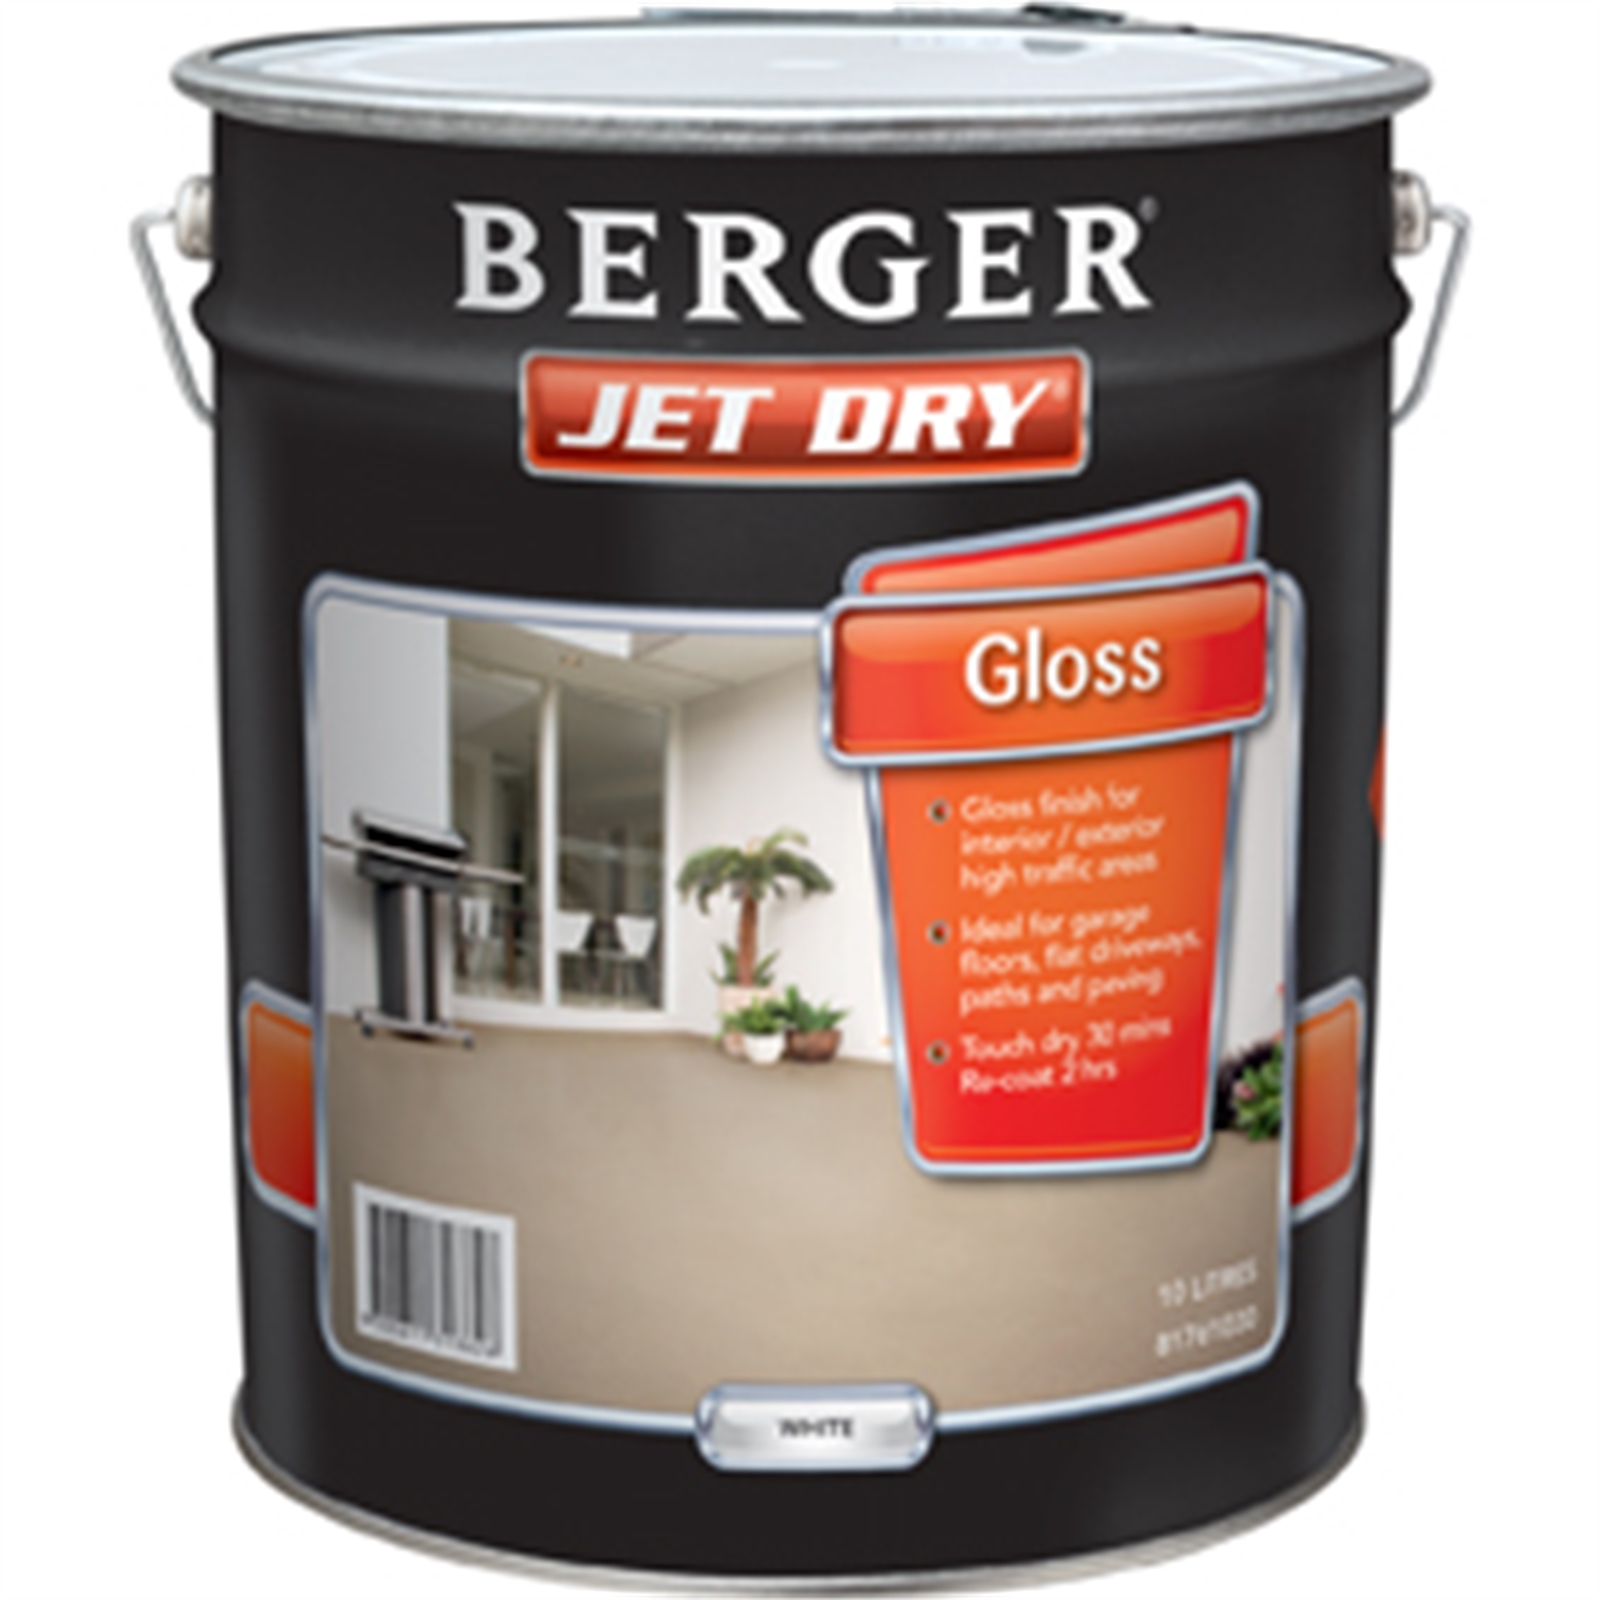 Berger Jet Dry 10L Gloss White Base Paving Paint